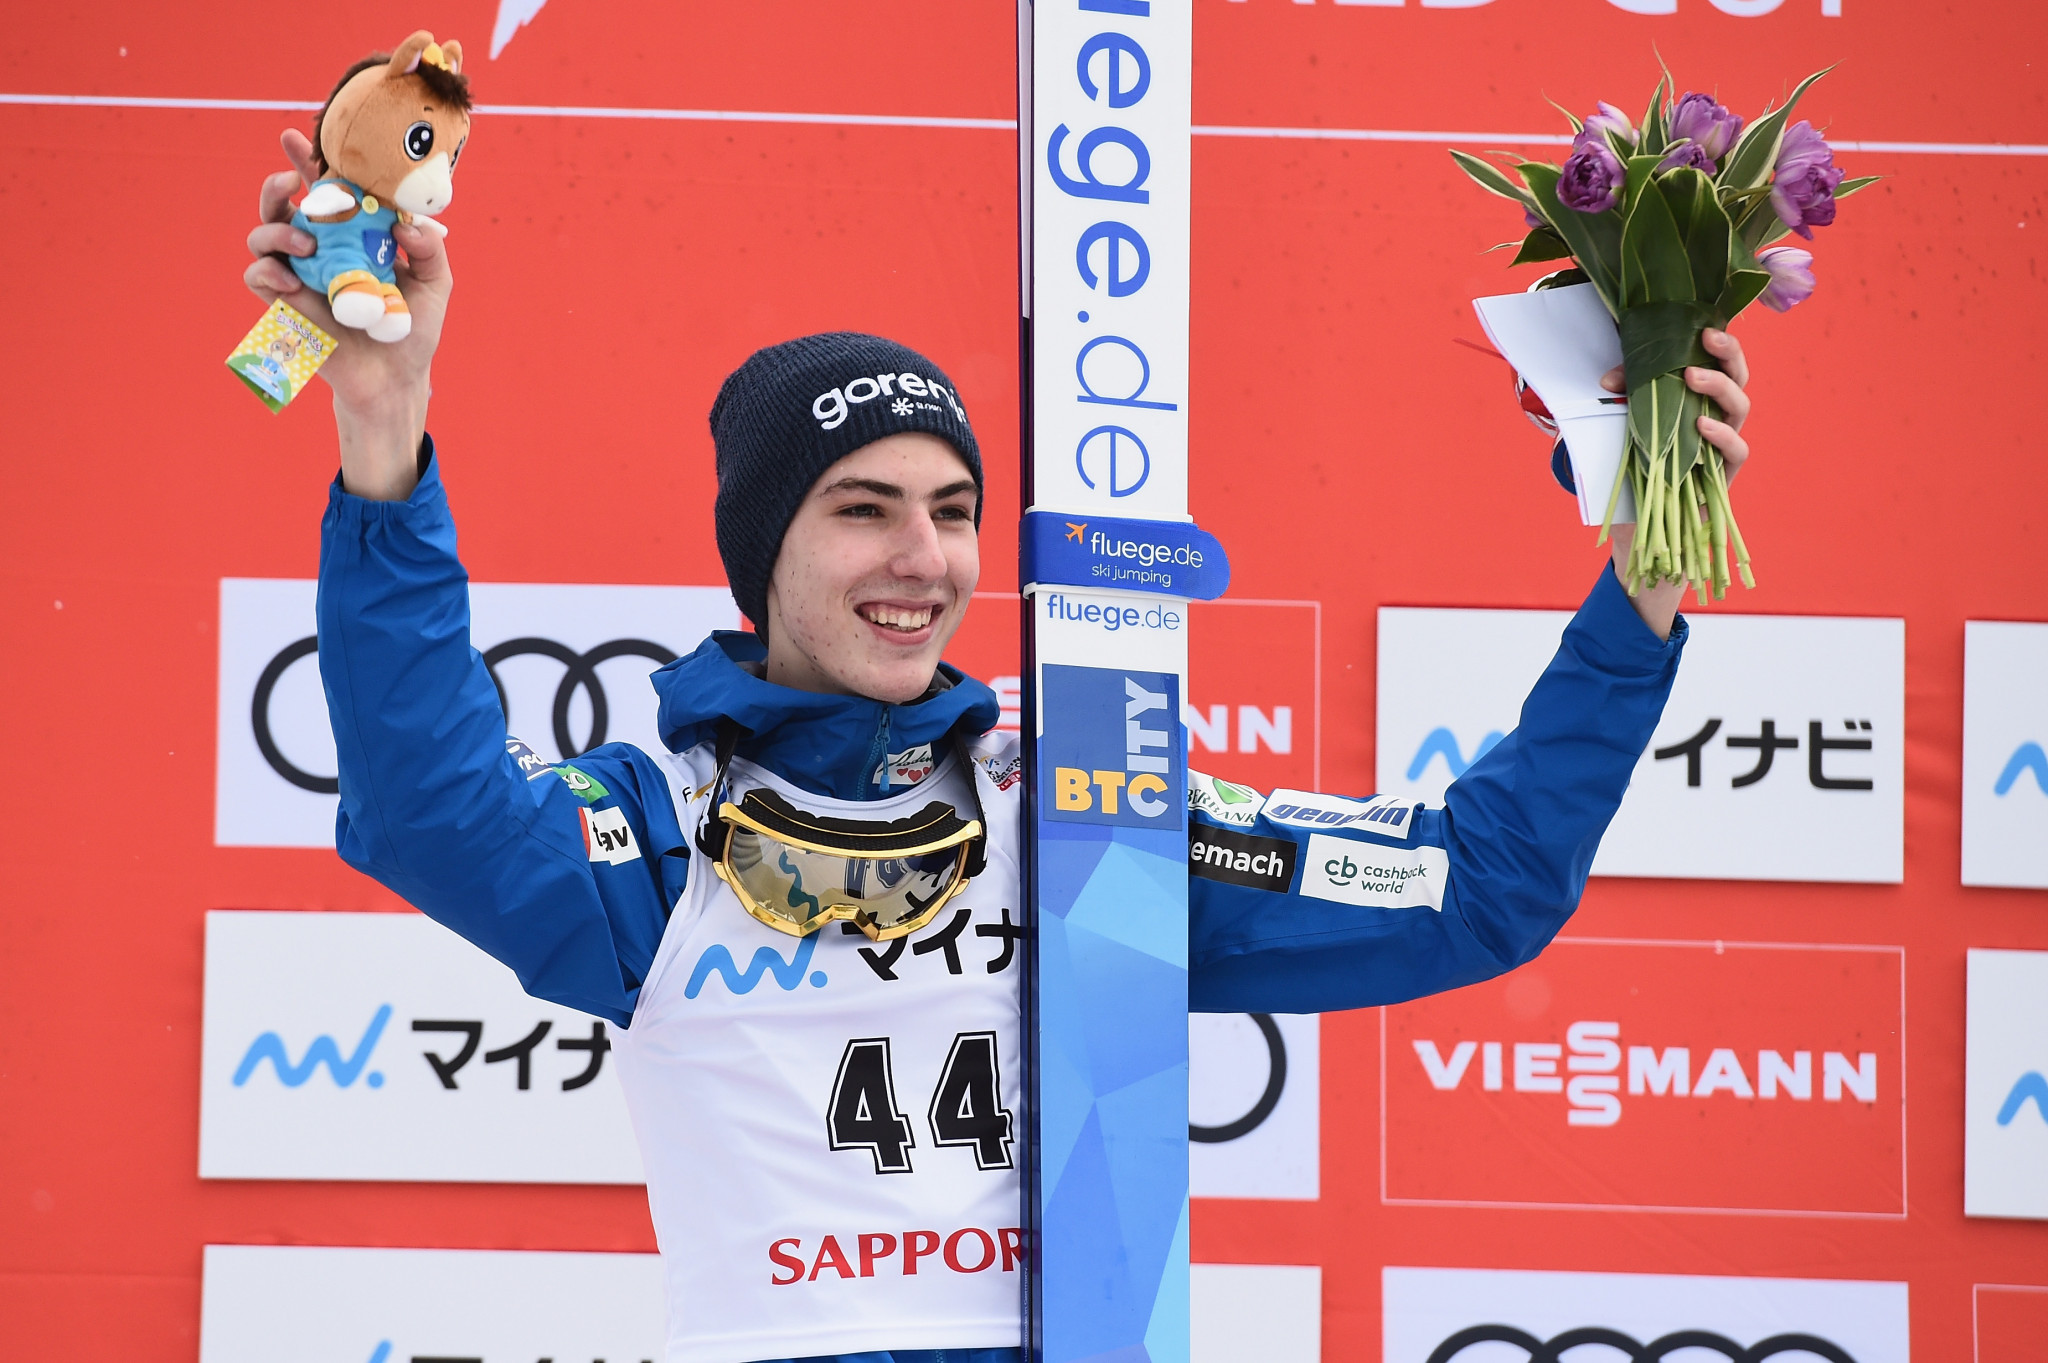 Decline continues for Kobayashi as Zajc wins first ski flying World Cup in Oberstdorf